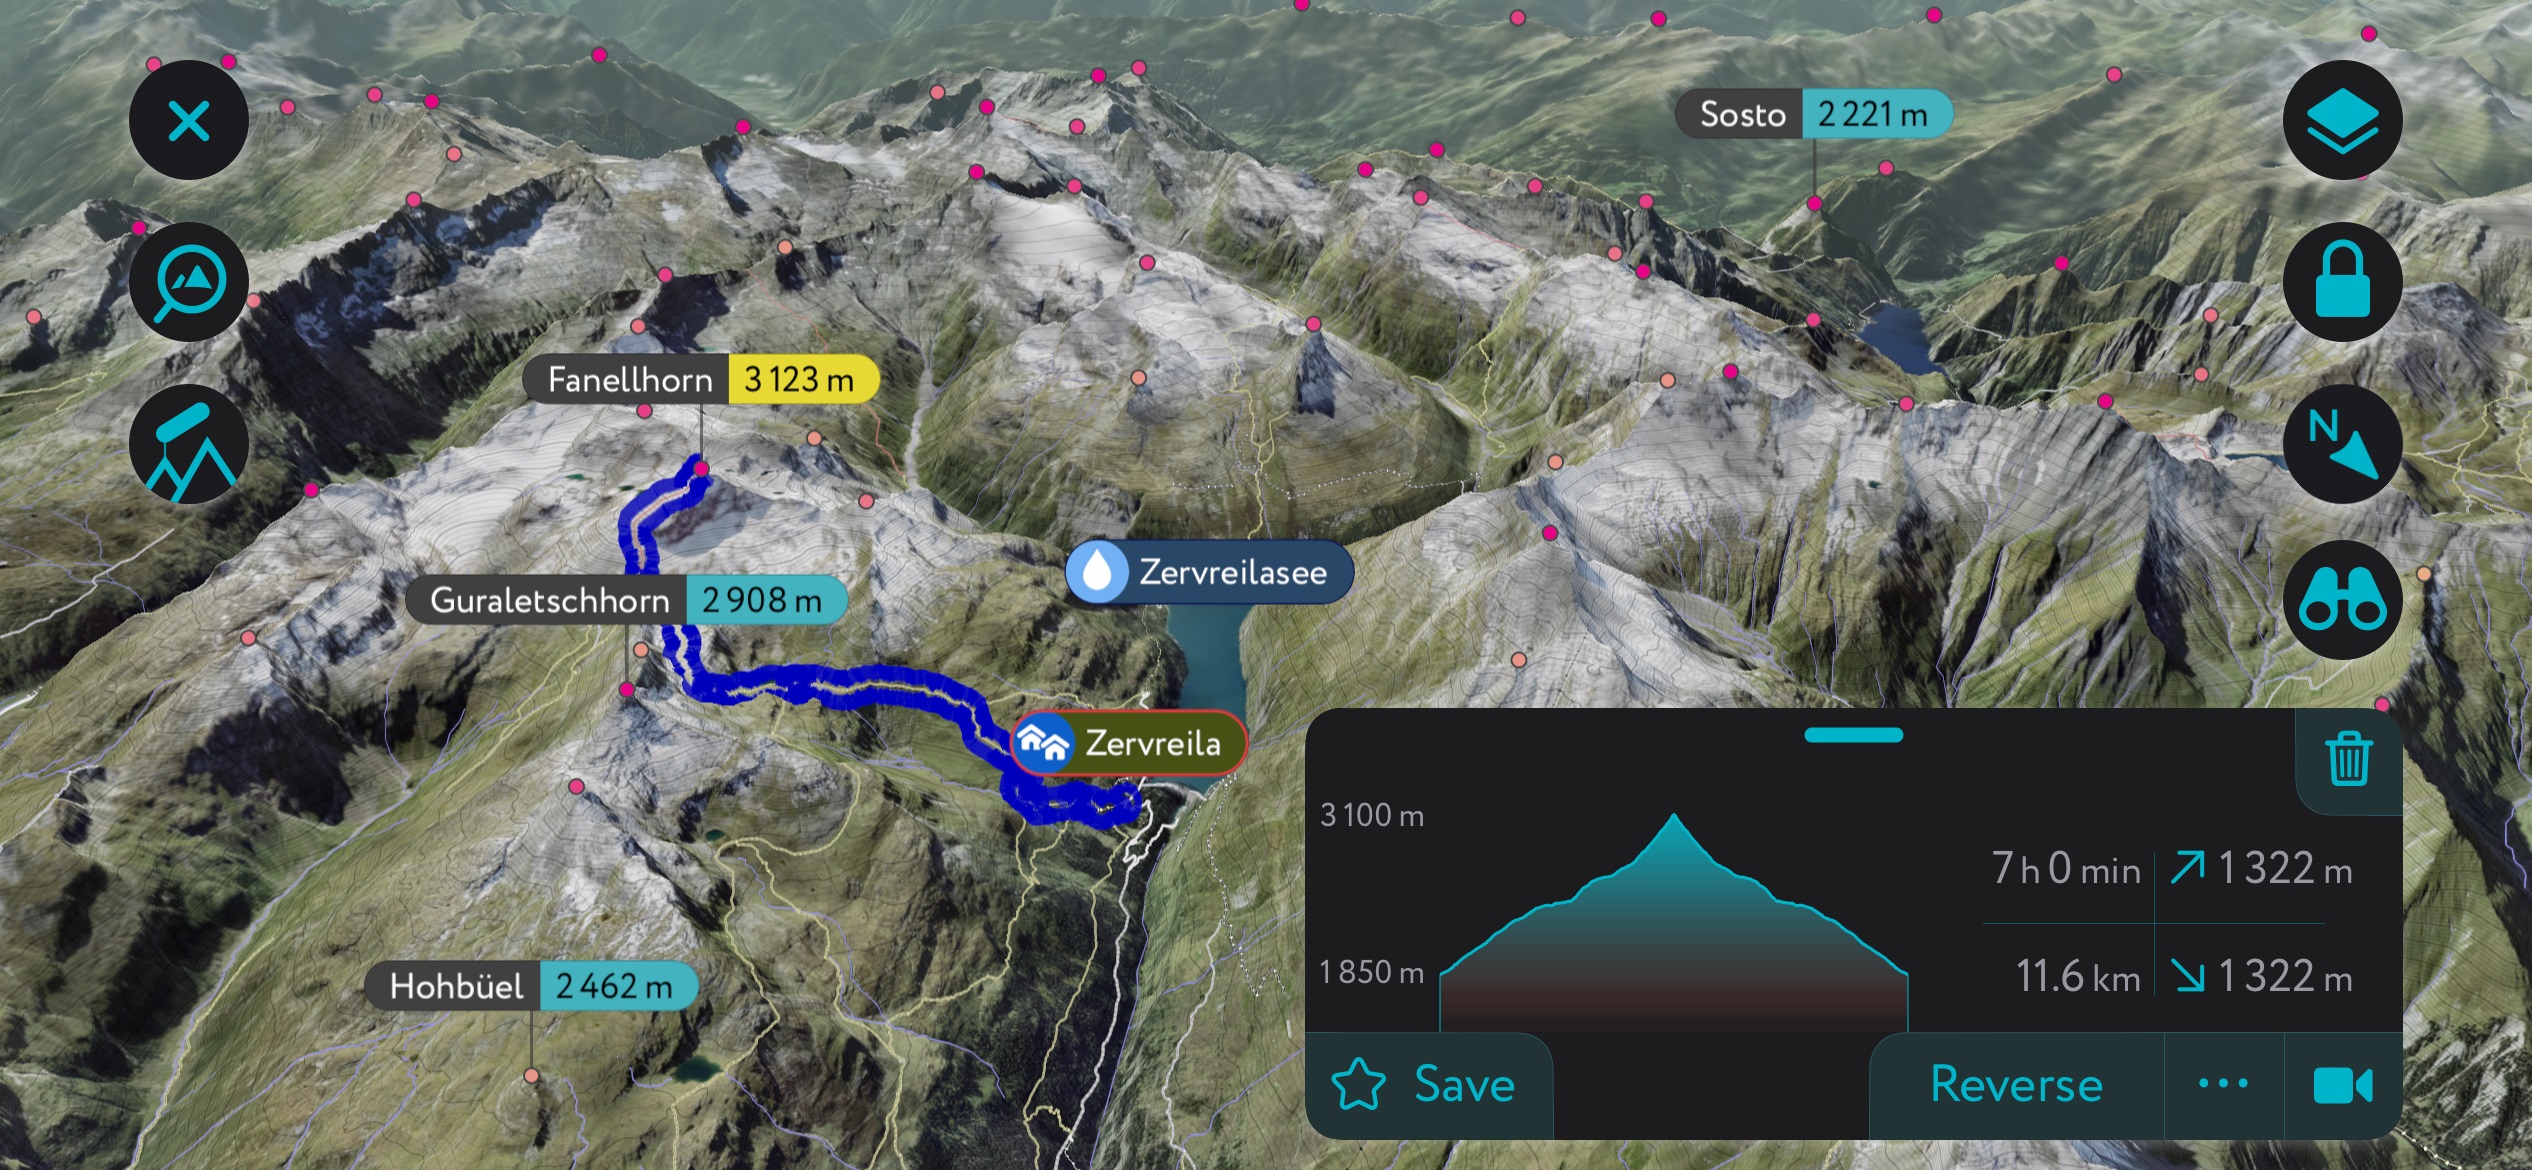 A generation of the Fannellhorn in the Albula Alps using PeakVisor’s mobile app. Albula Alps